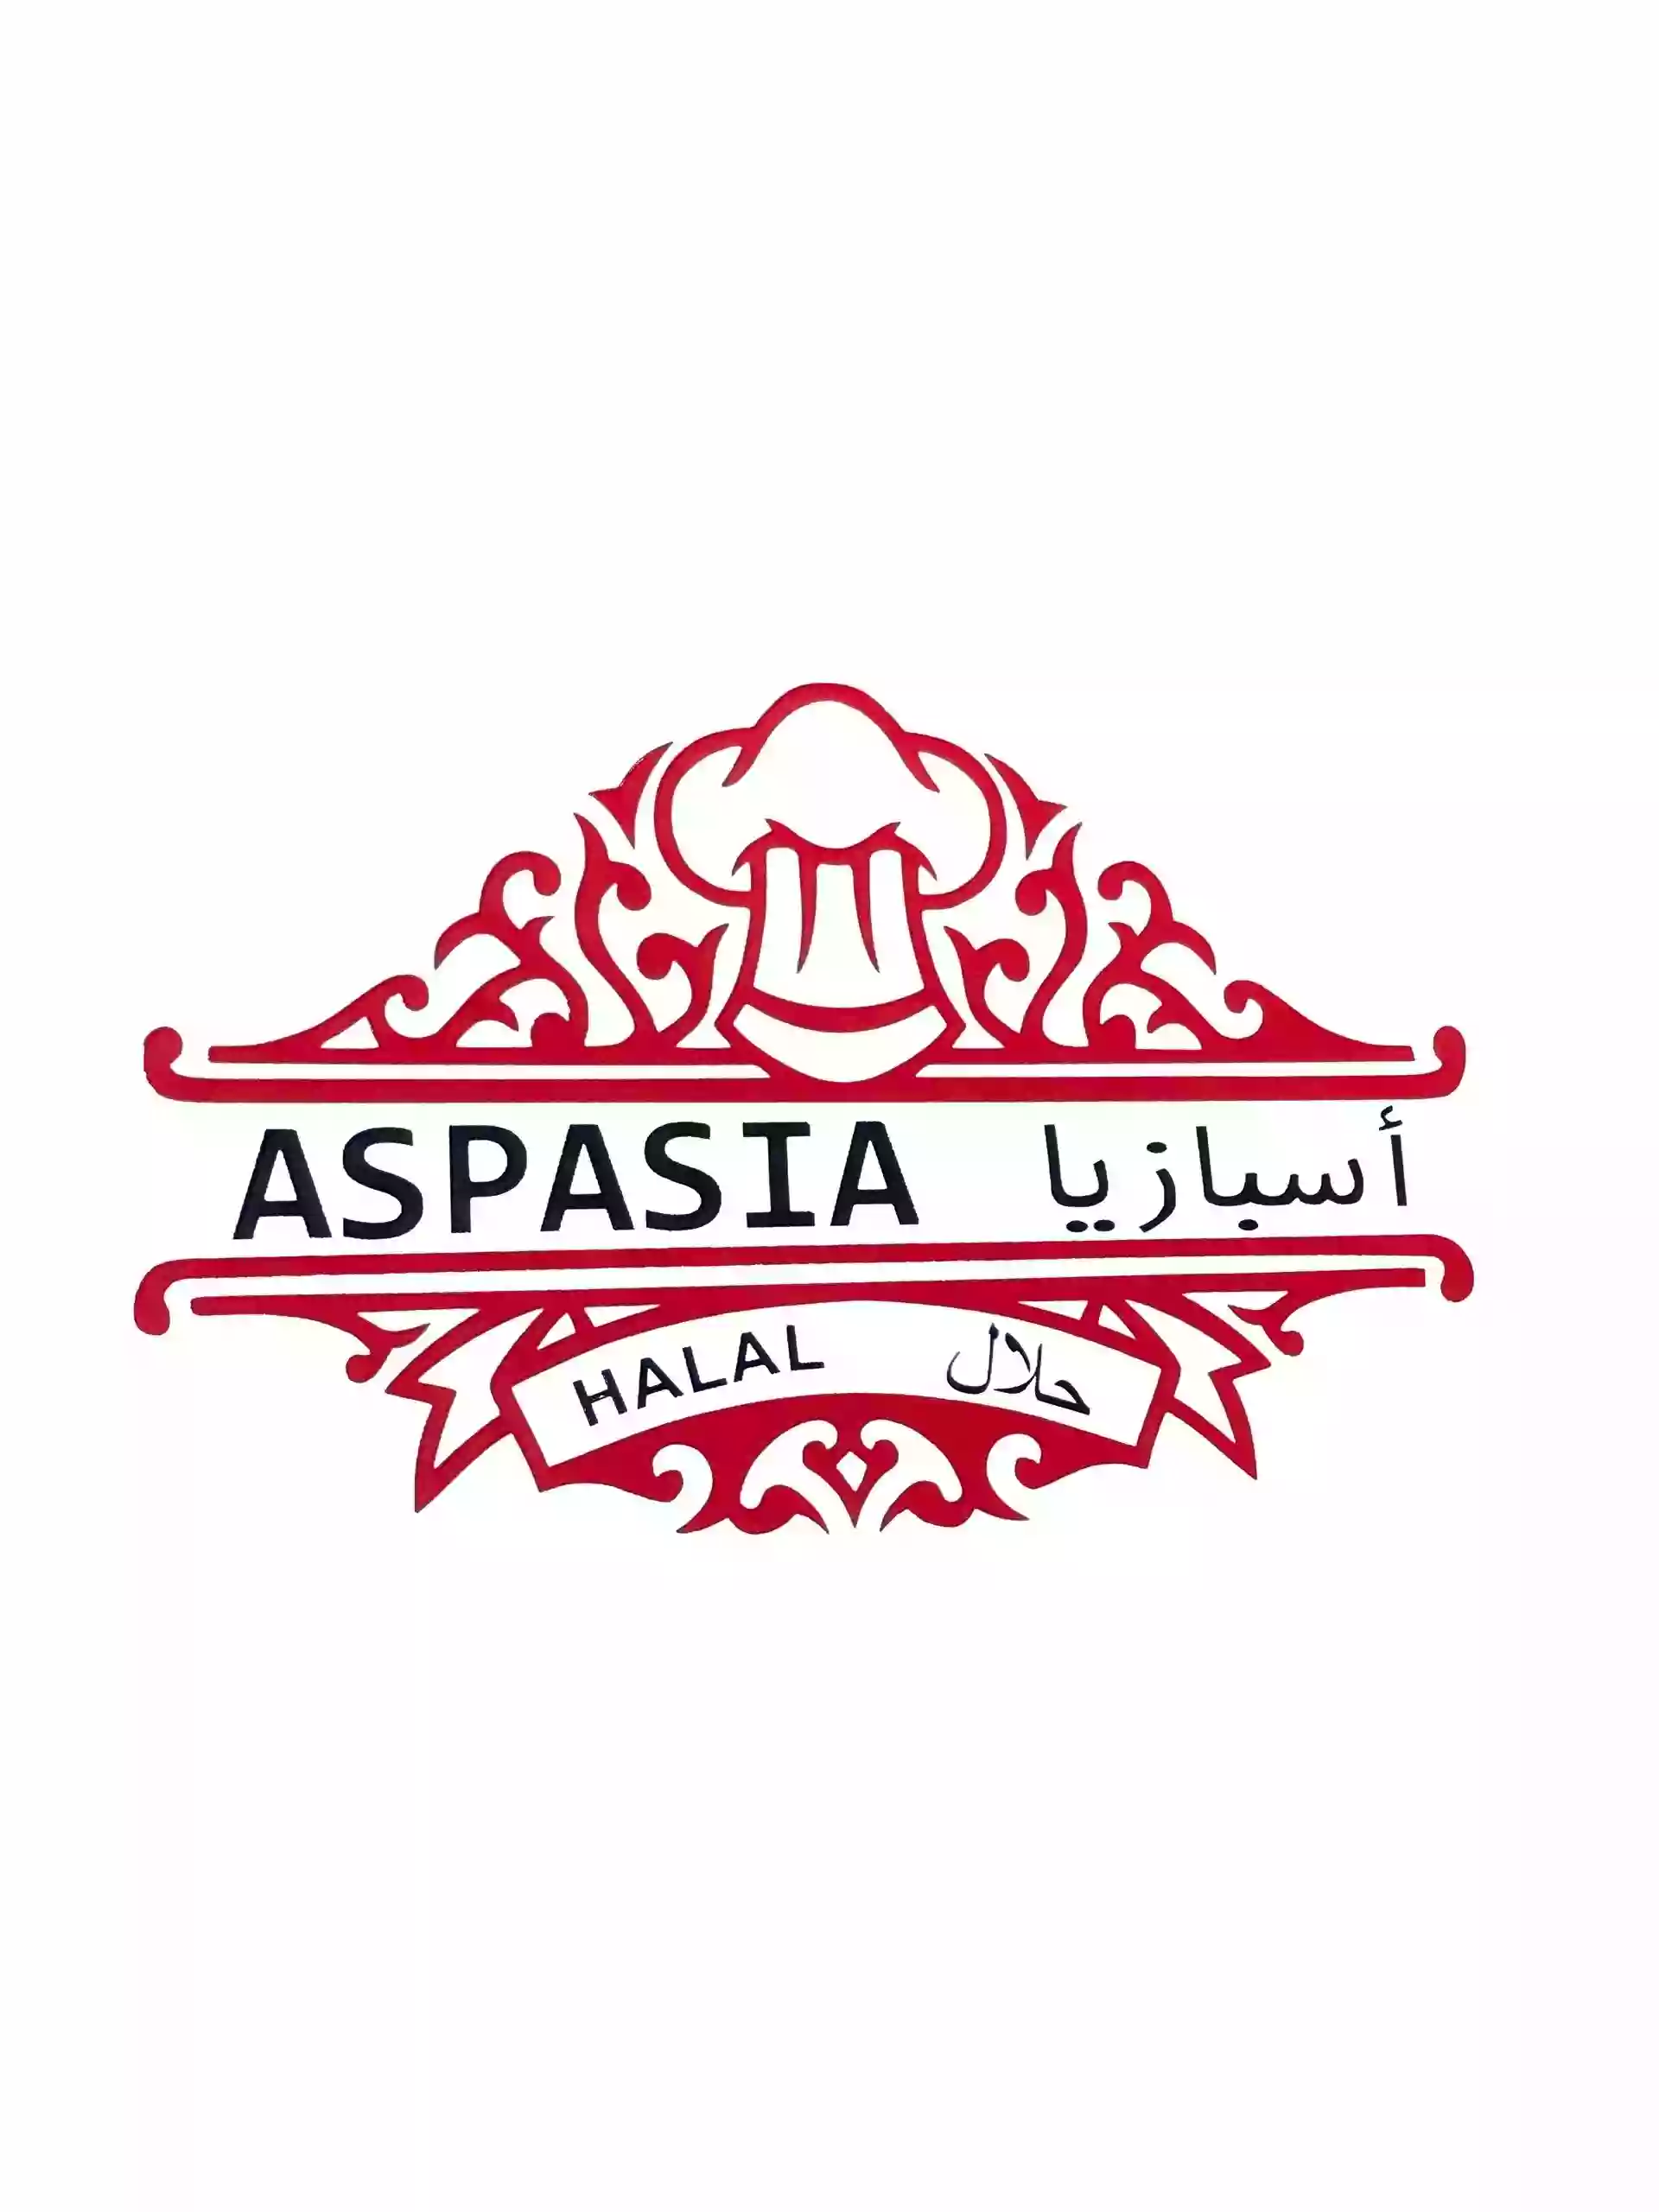 Aspasia Mediterranean